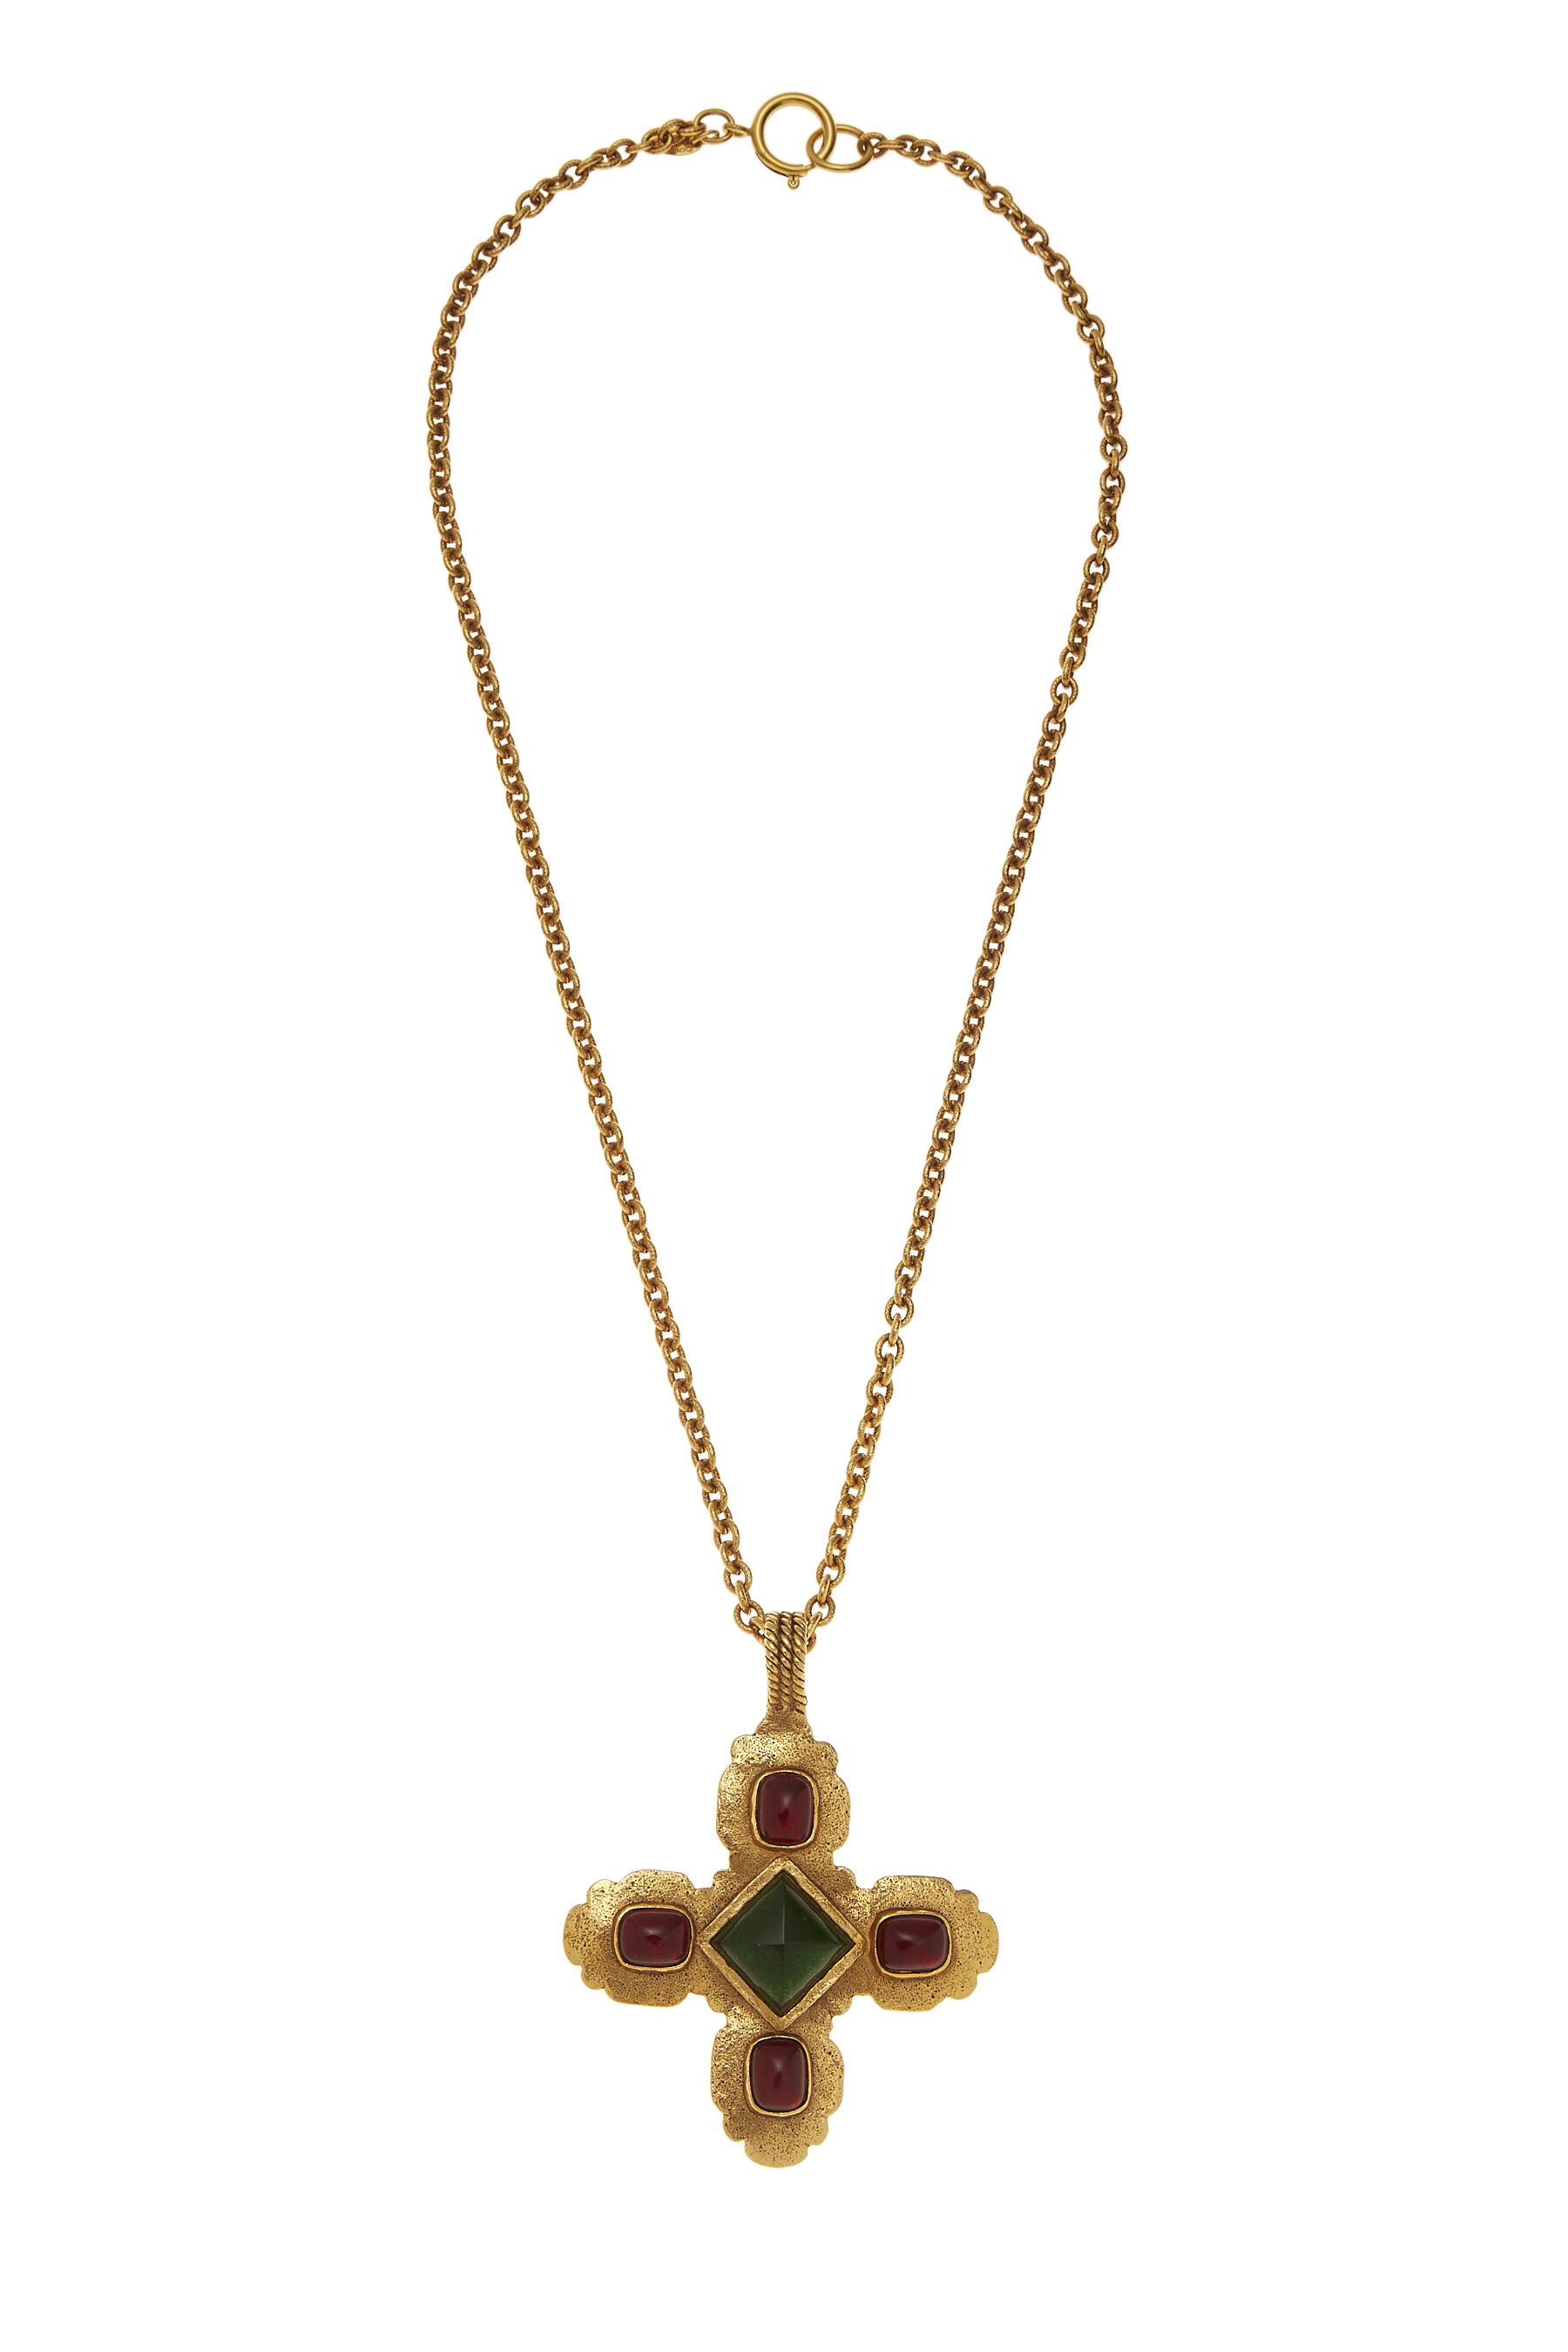 Chanel - Gold & Multicolor Gripoix Cross Necklace